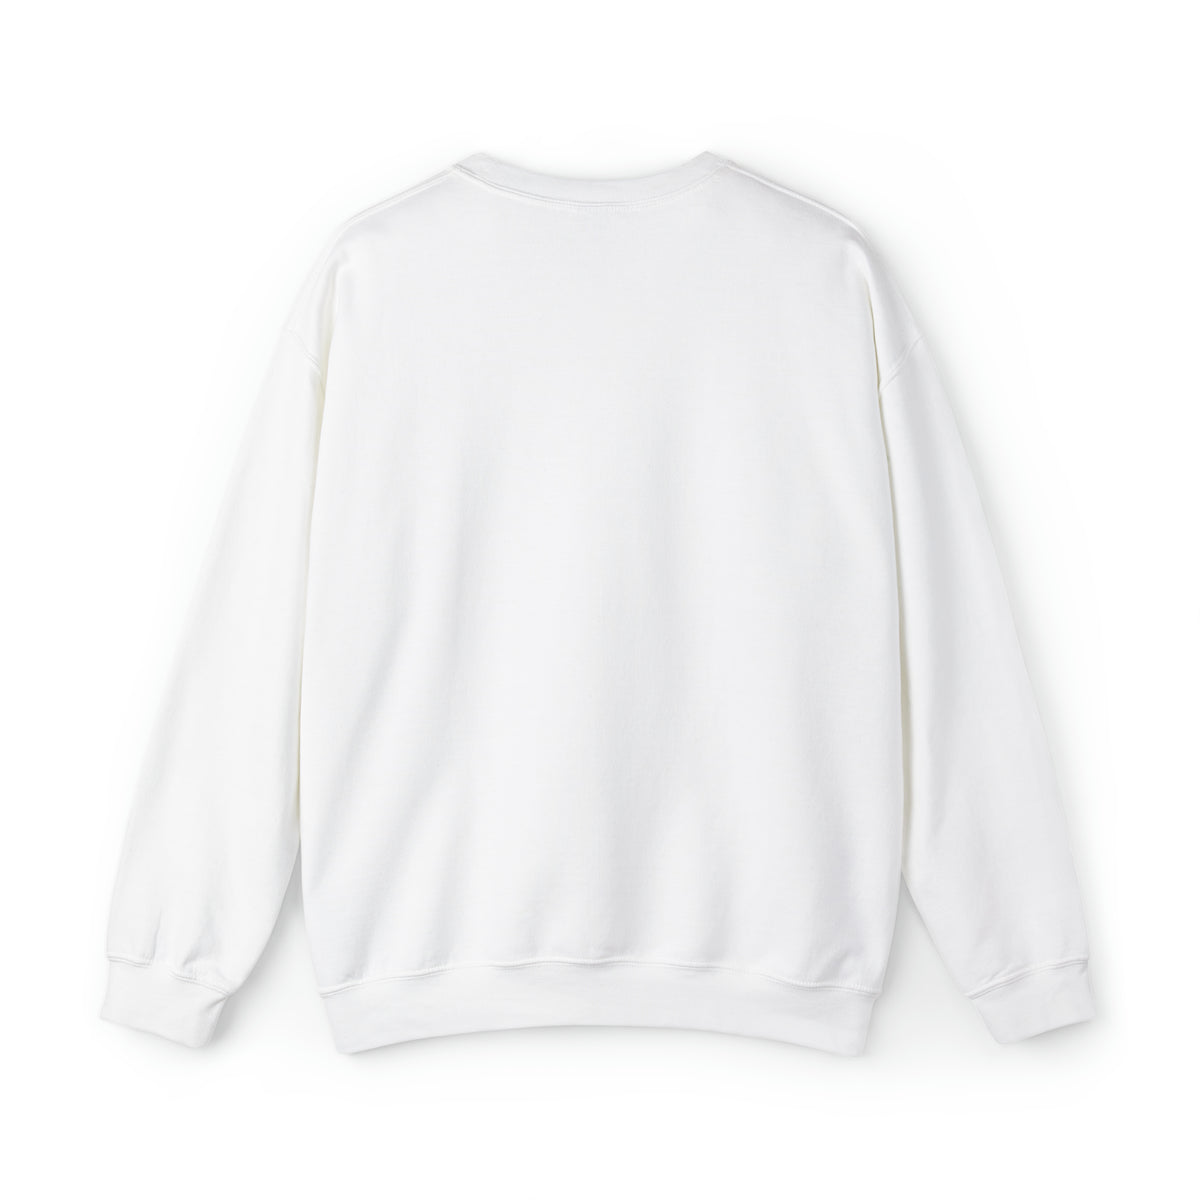 Jingle Cruise Gildan Unisex Heavy Blend™ Crewneck Sweatshirt